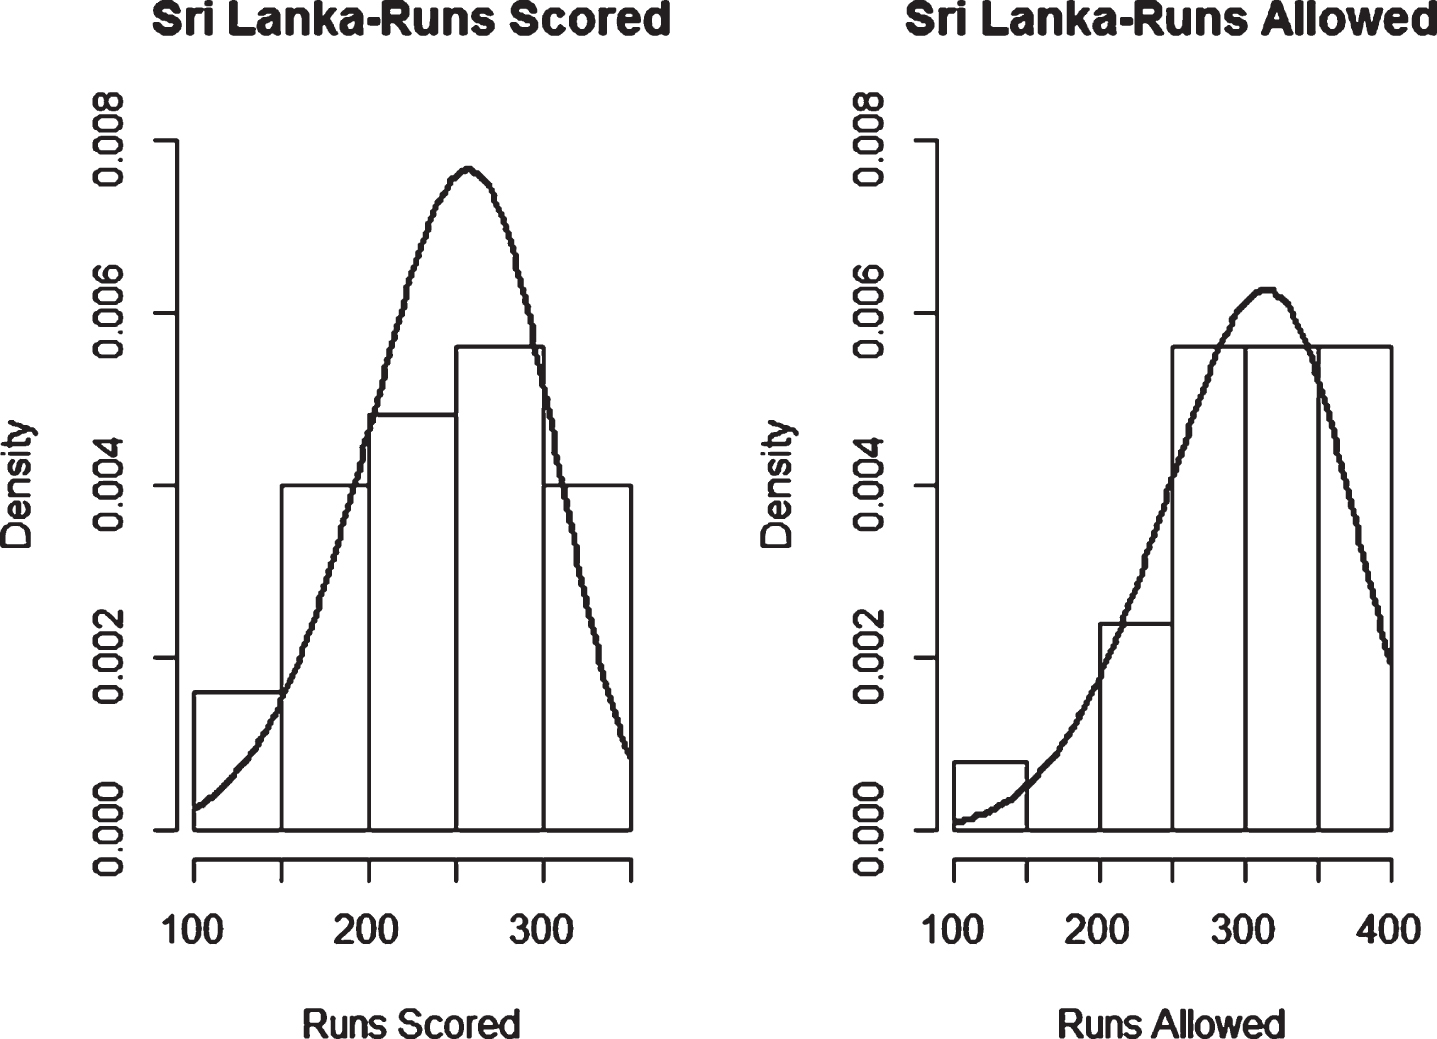 Weibull Distribution Fit for Runs Scored and Runs Allowed for Sri Lanka using Maximum Likelihood Method (ODI).